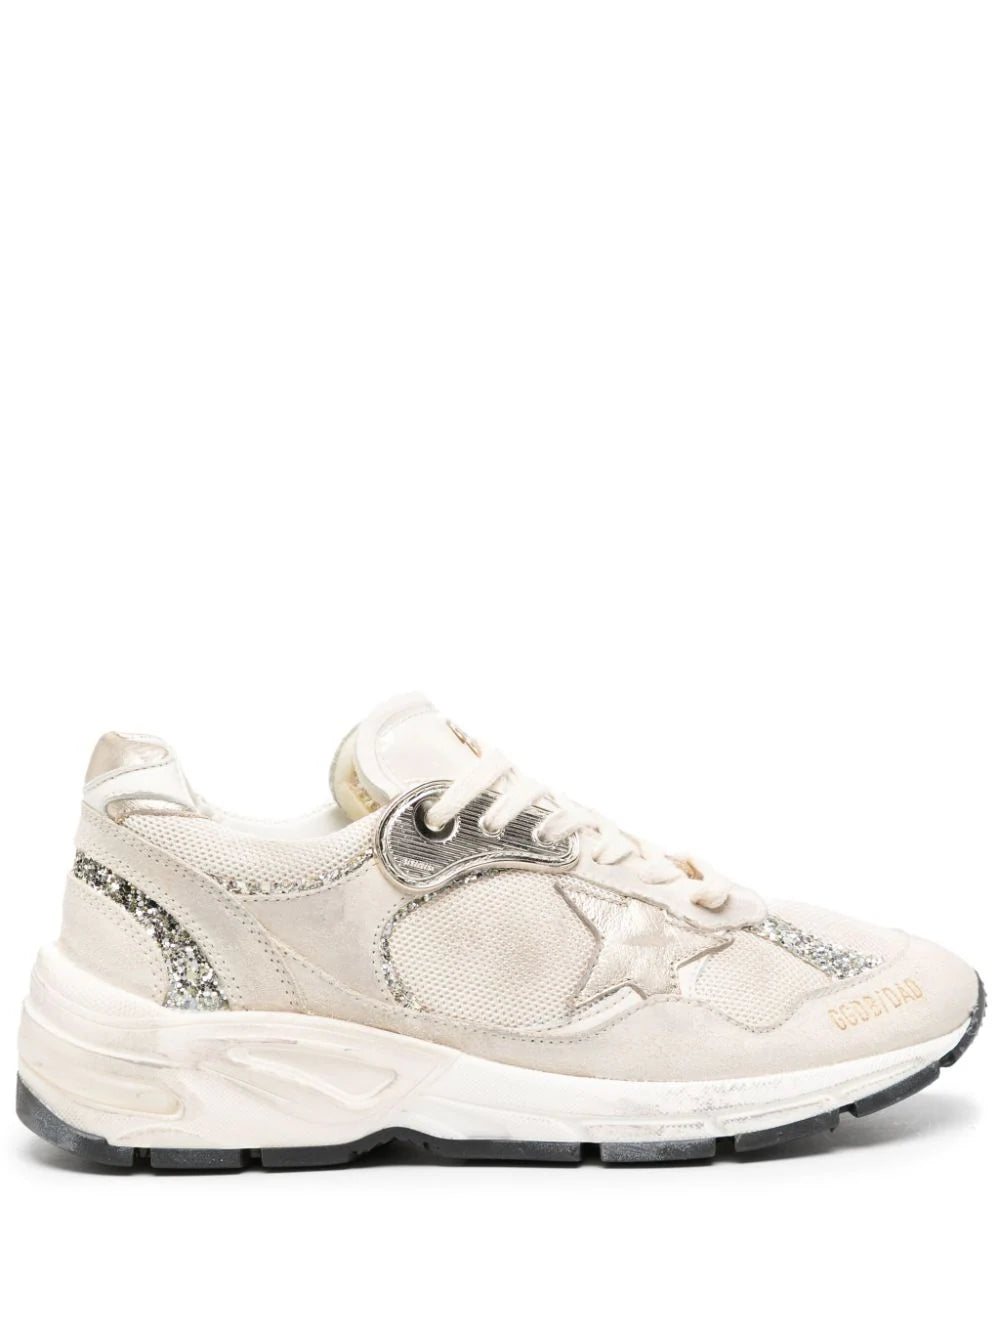 Running Dad Sneaker - Cream/Gold/Silver